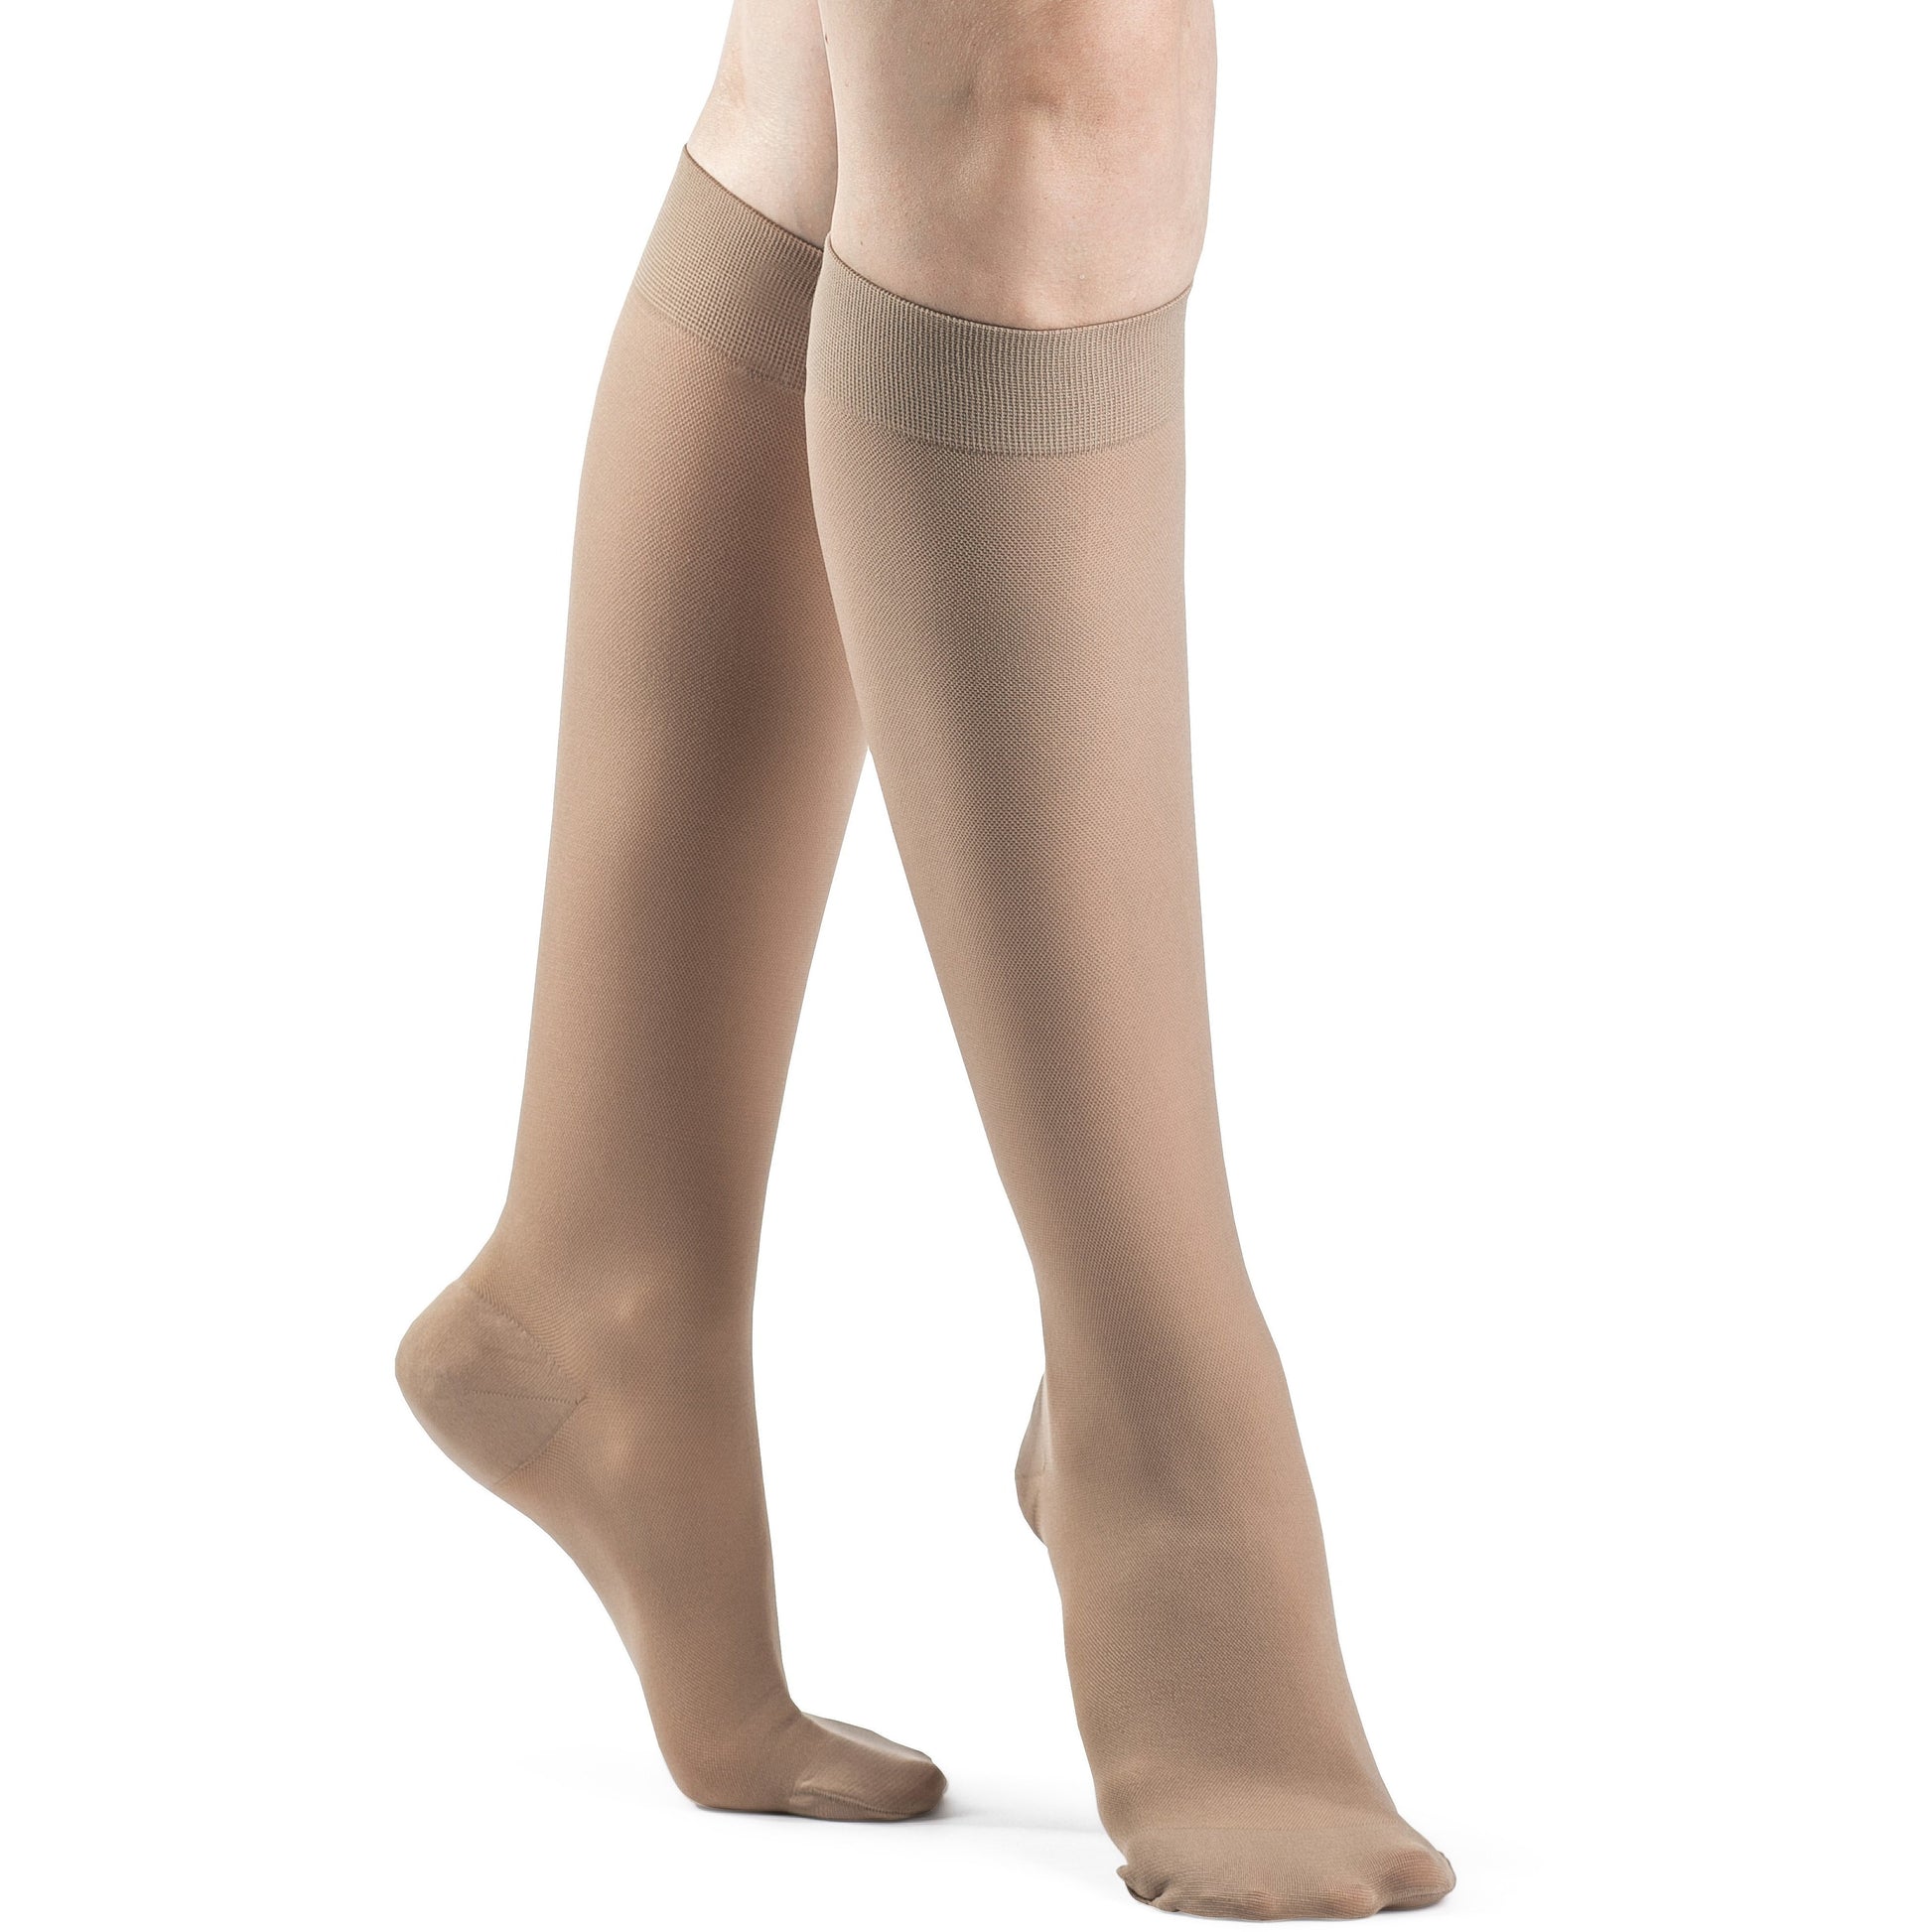 Sigvaris Soft Silhouette Compression Leggings 15-20 mmHg for Women